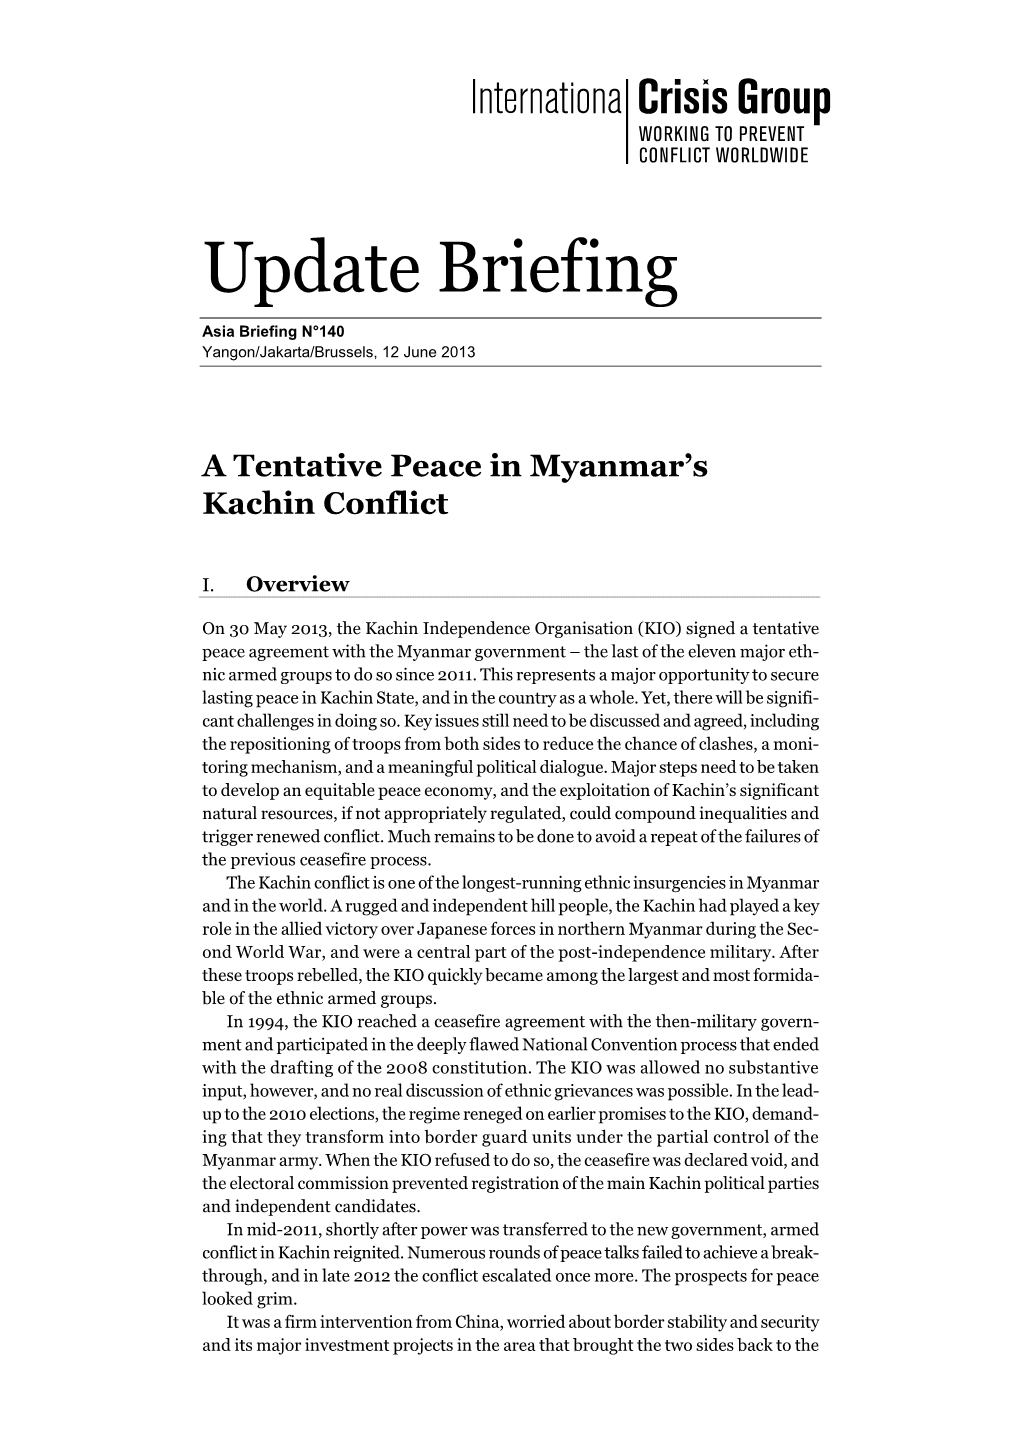 A Tentative Peace in Myanmar's Kachin Conflict